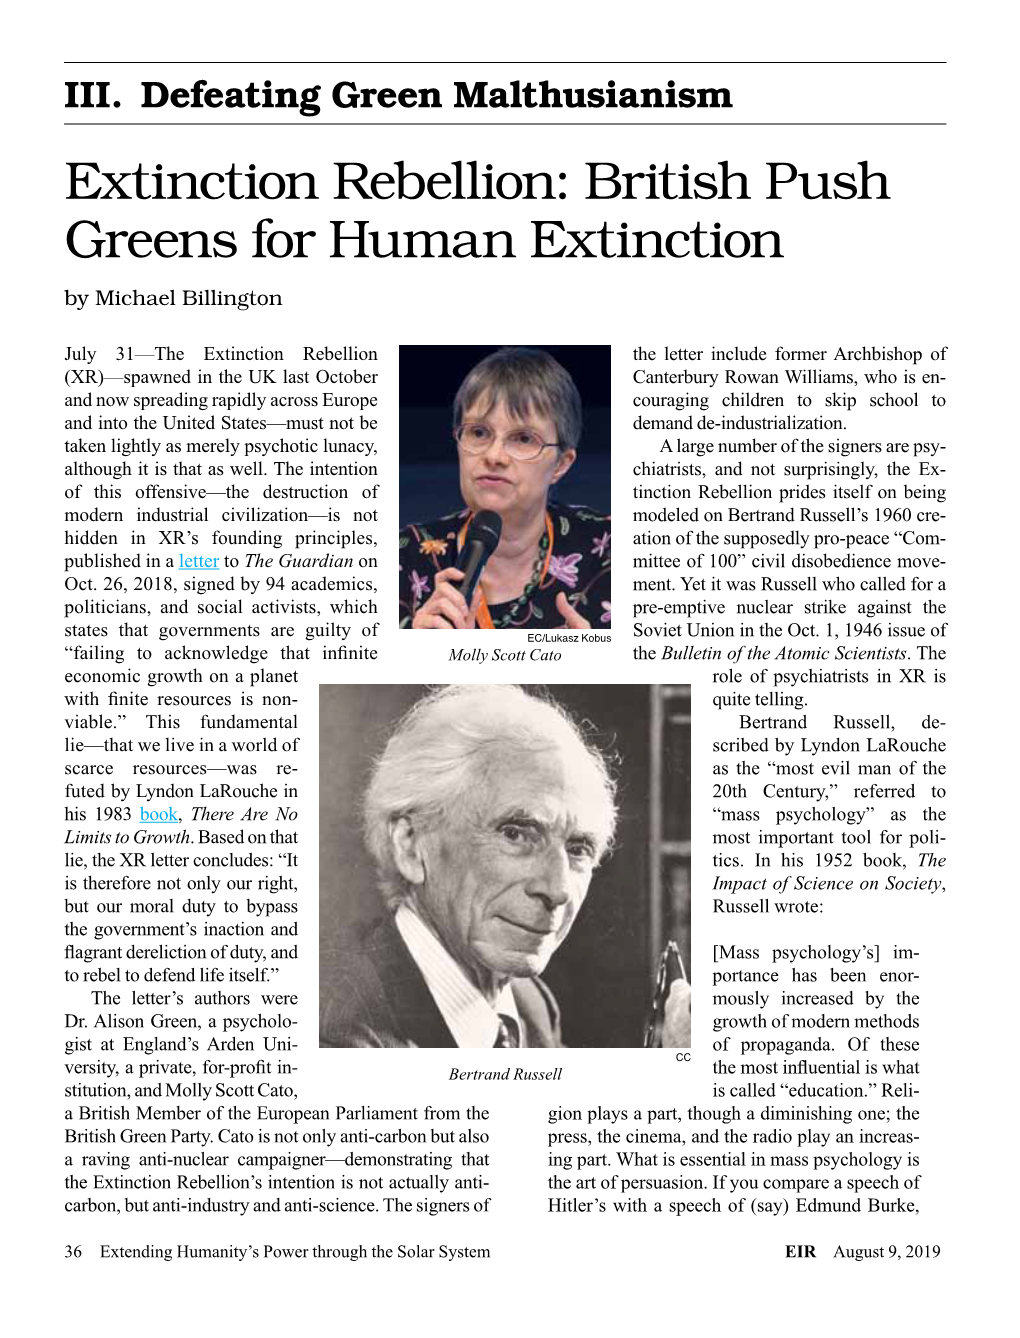 Extinction Rebellion: British Push Greens for Human Extinction by Michael Billington